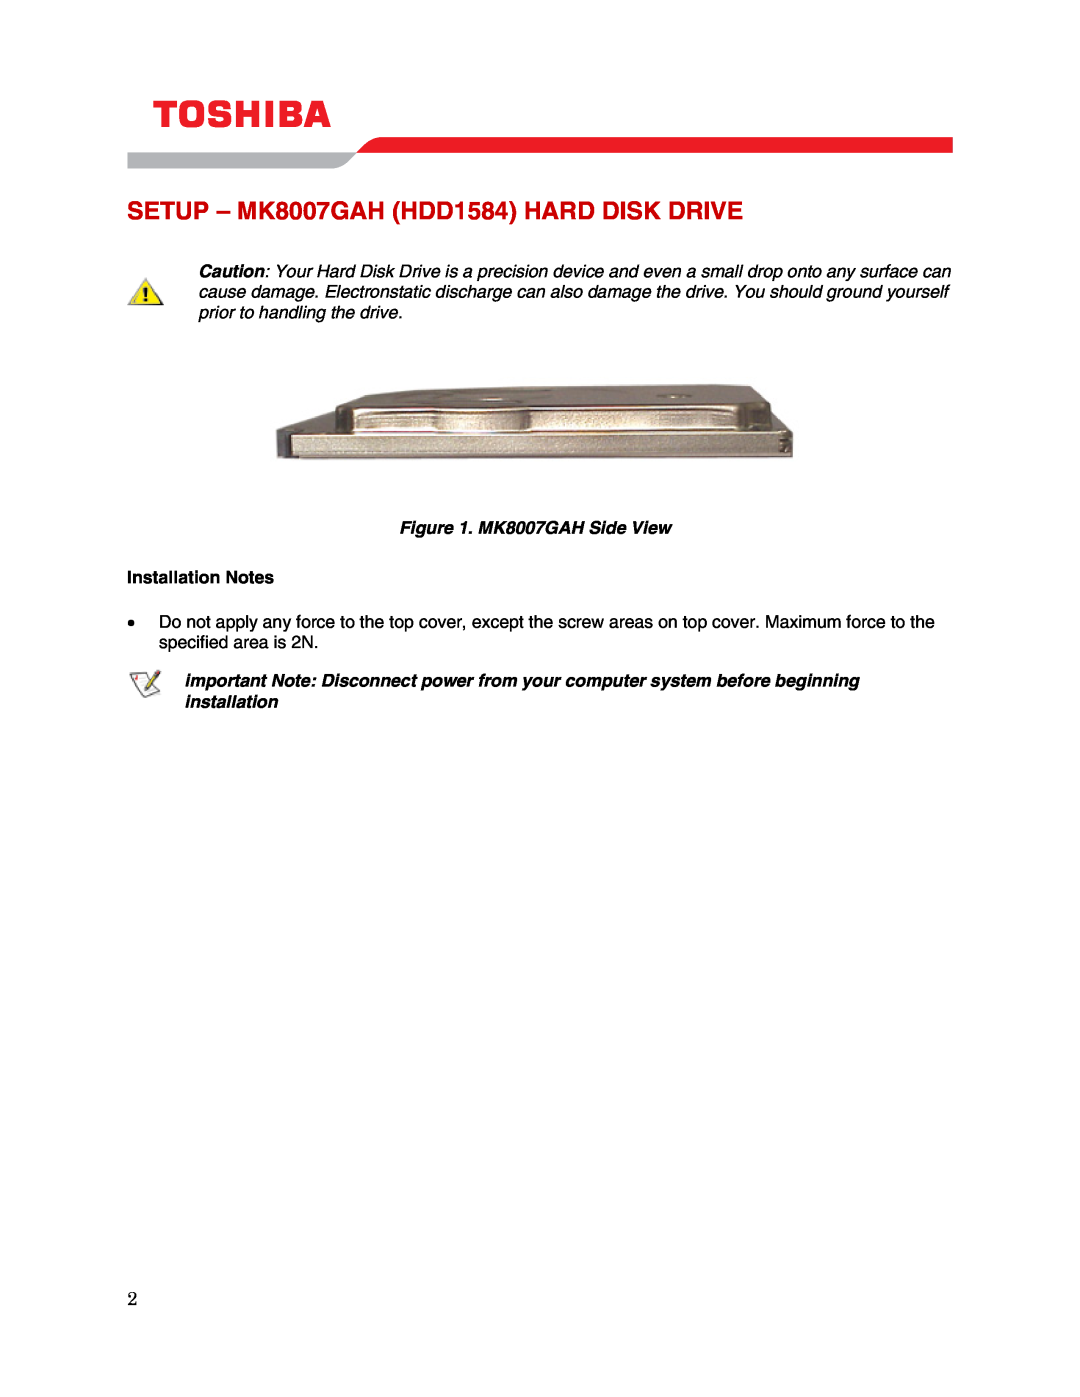 Toshiba user manual SETUP - MK8007GAH HDD1584 HARD DISK DRIVE, MK8007GAH Side View, Installation Notes 